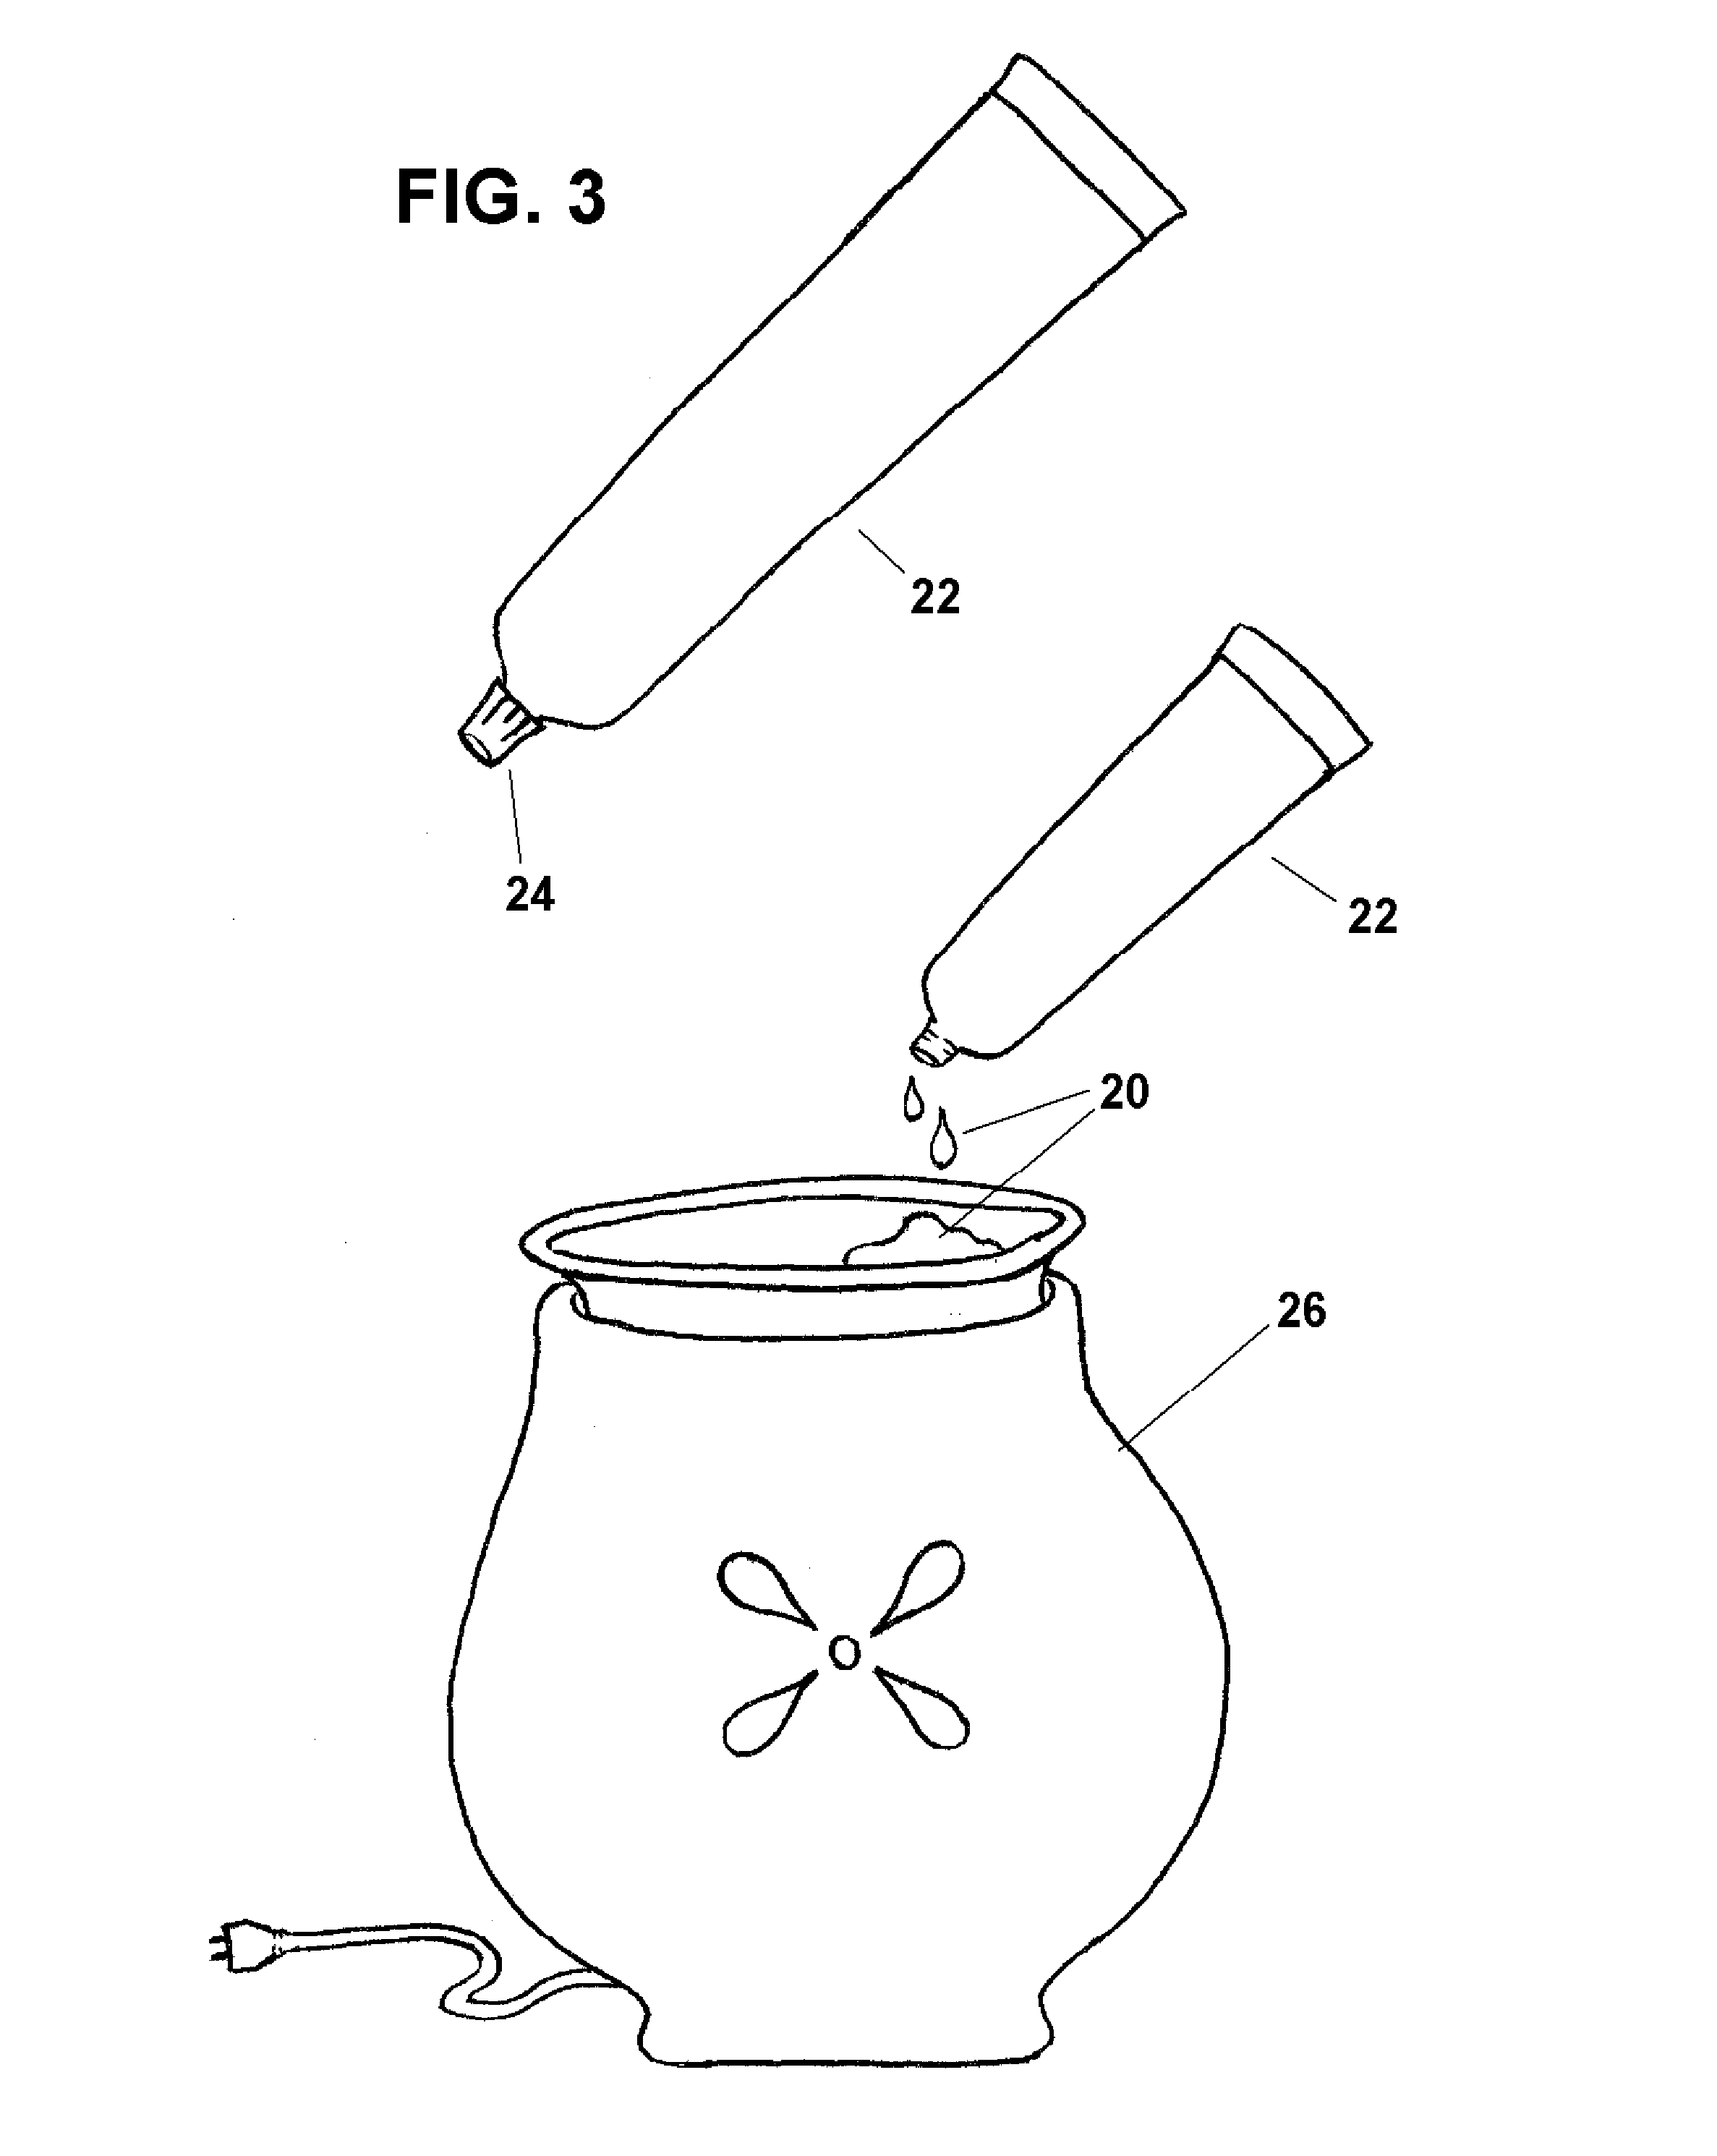 Semi-liquid candle